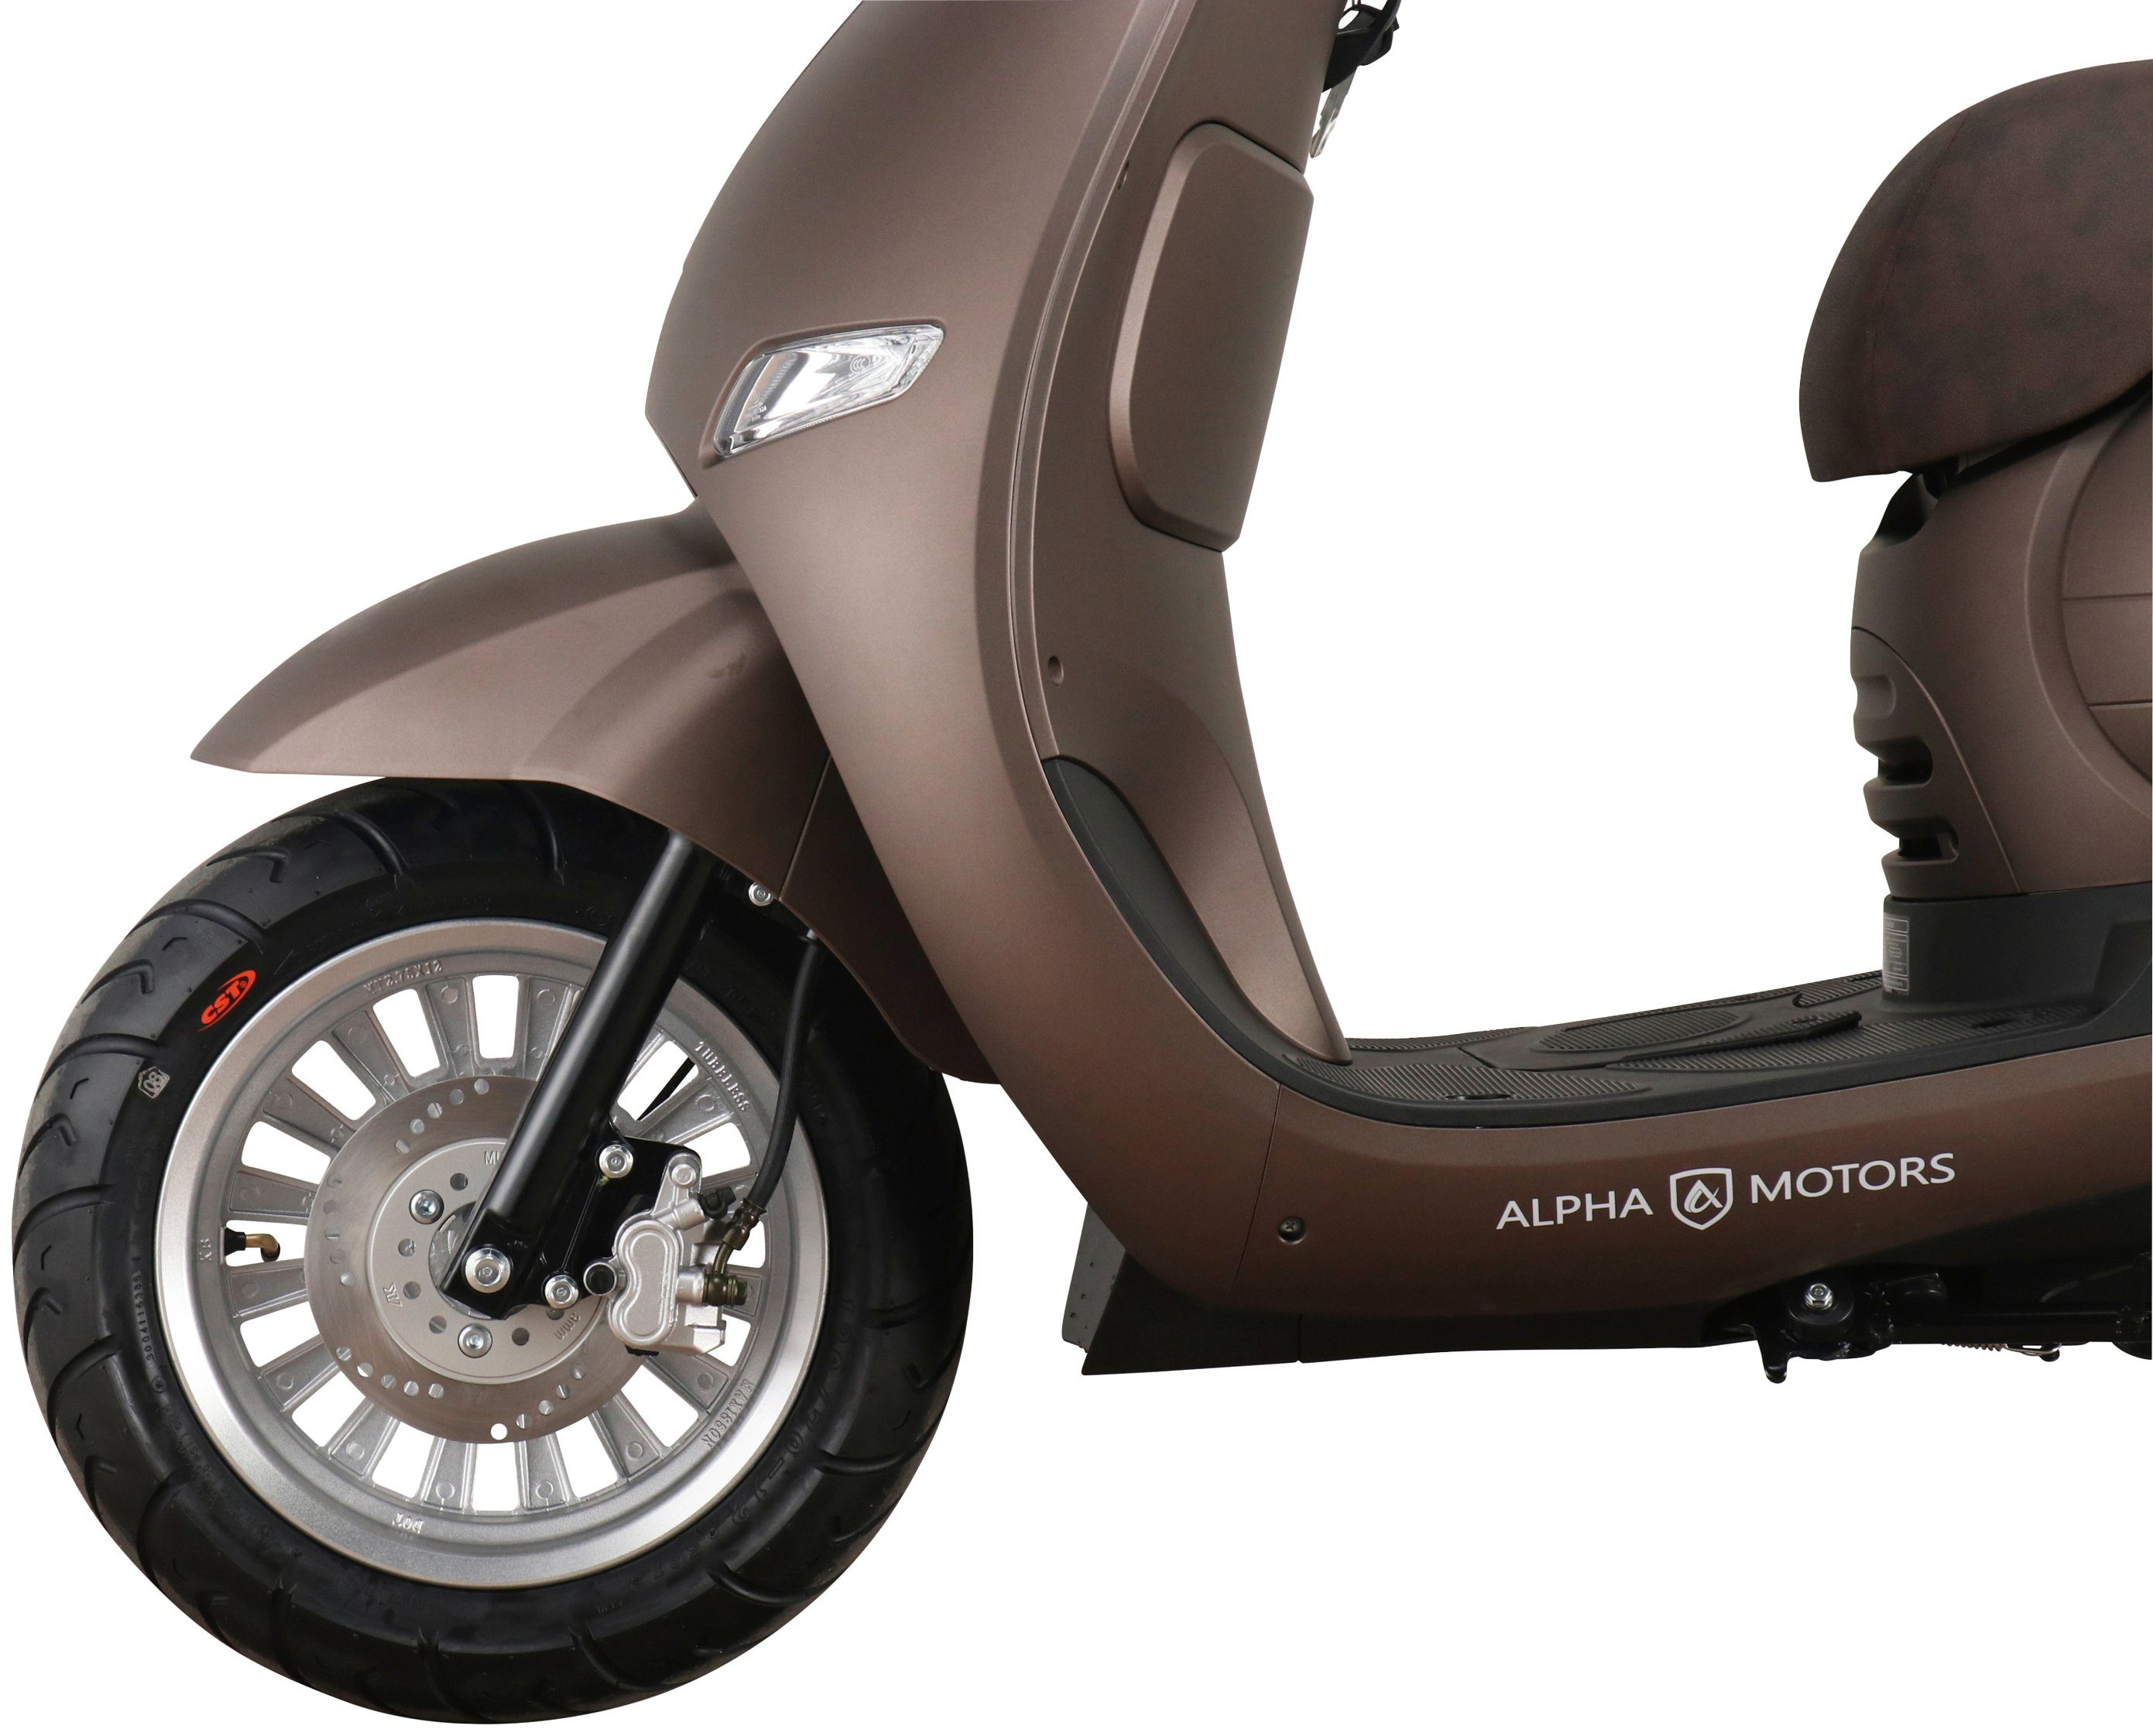 Alpha Motors 5 Motorroller 125 Cappucino, Euro km/h, ccm, 85